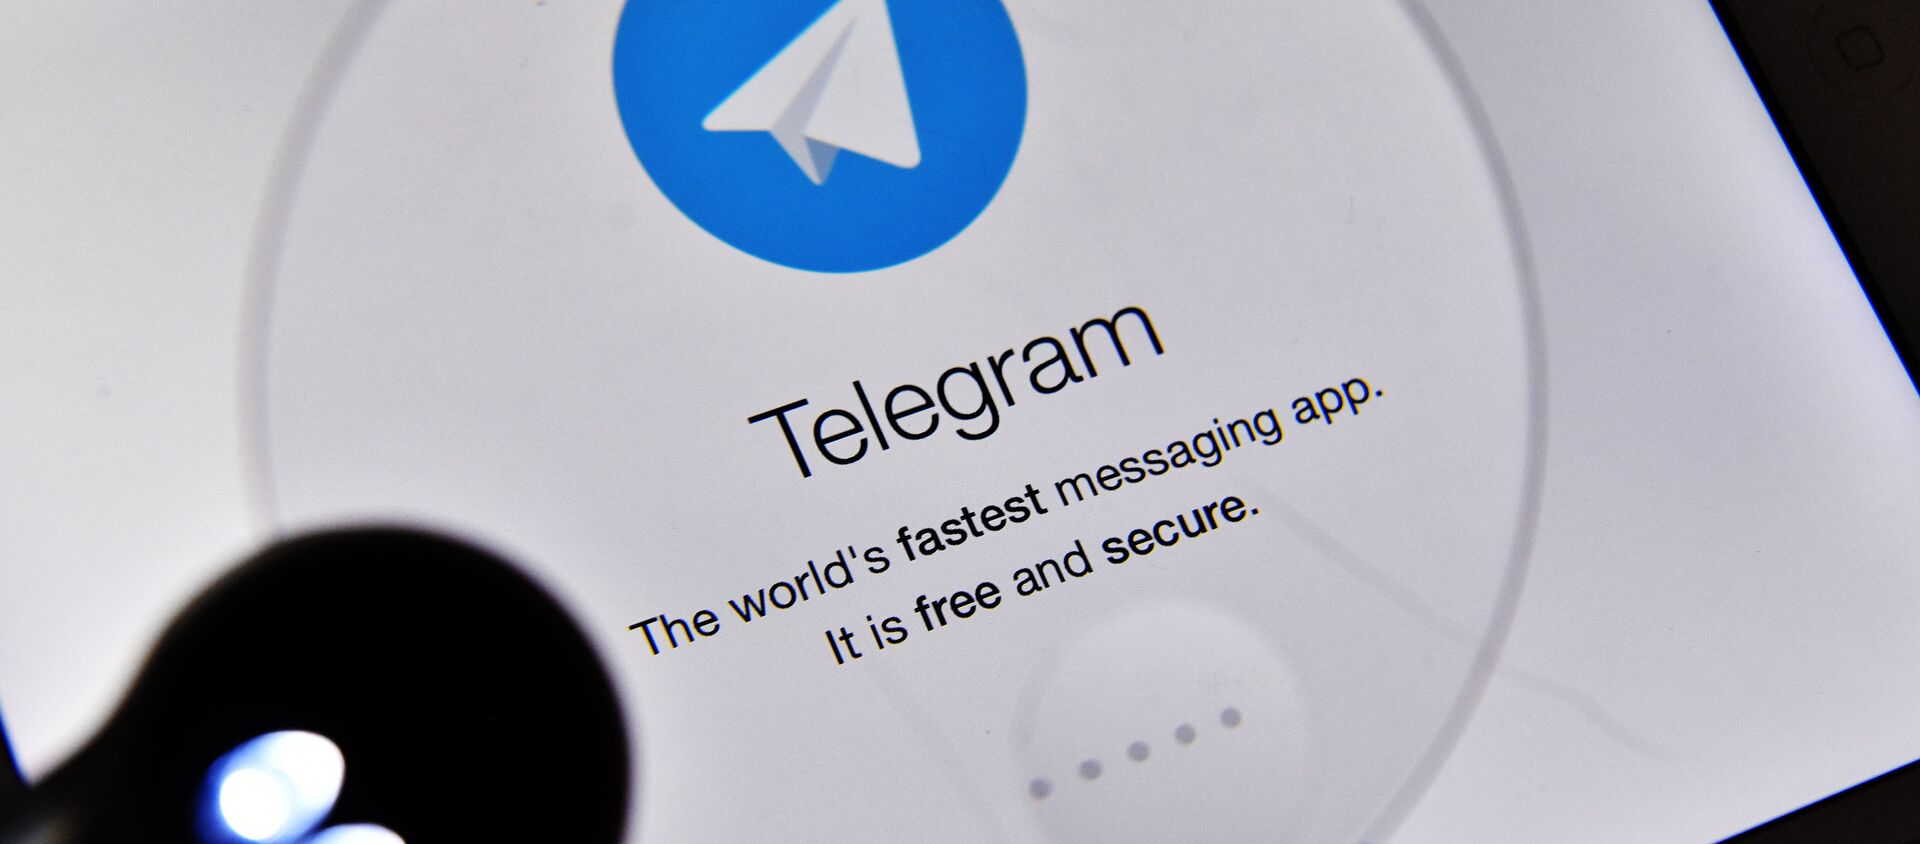 Логотип мессенджера Telegram на экране планшета, архивное фото - Sputnik Таджикистан, 1920, 14.02.2021